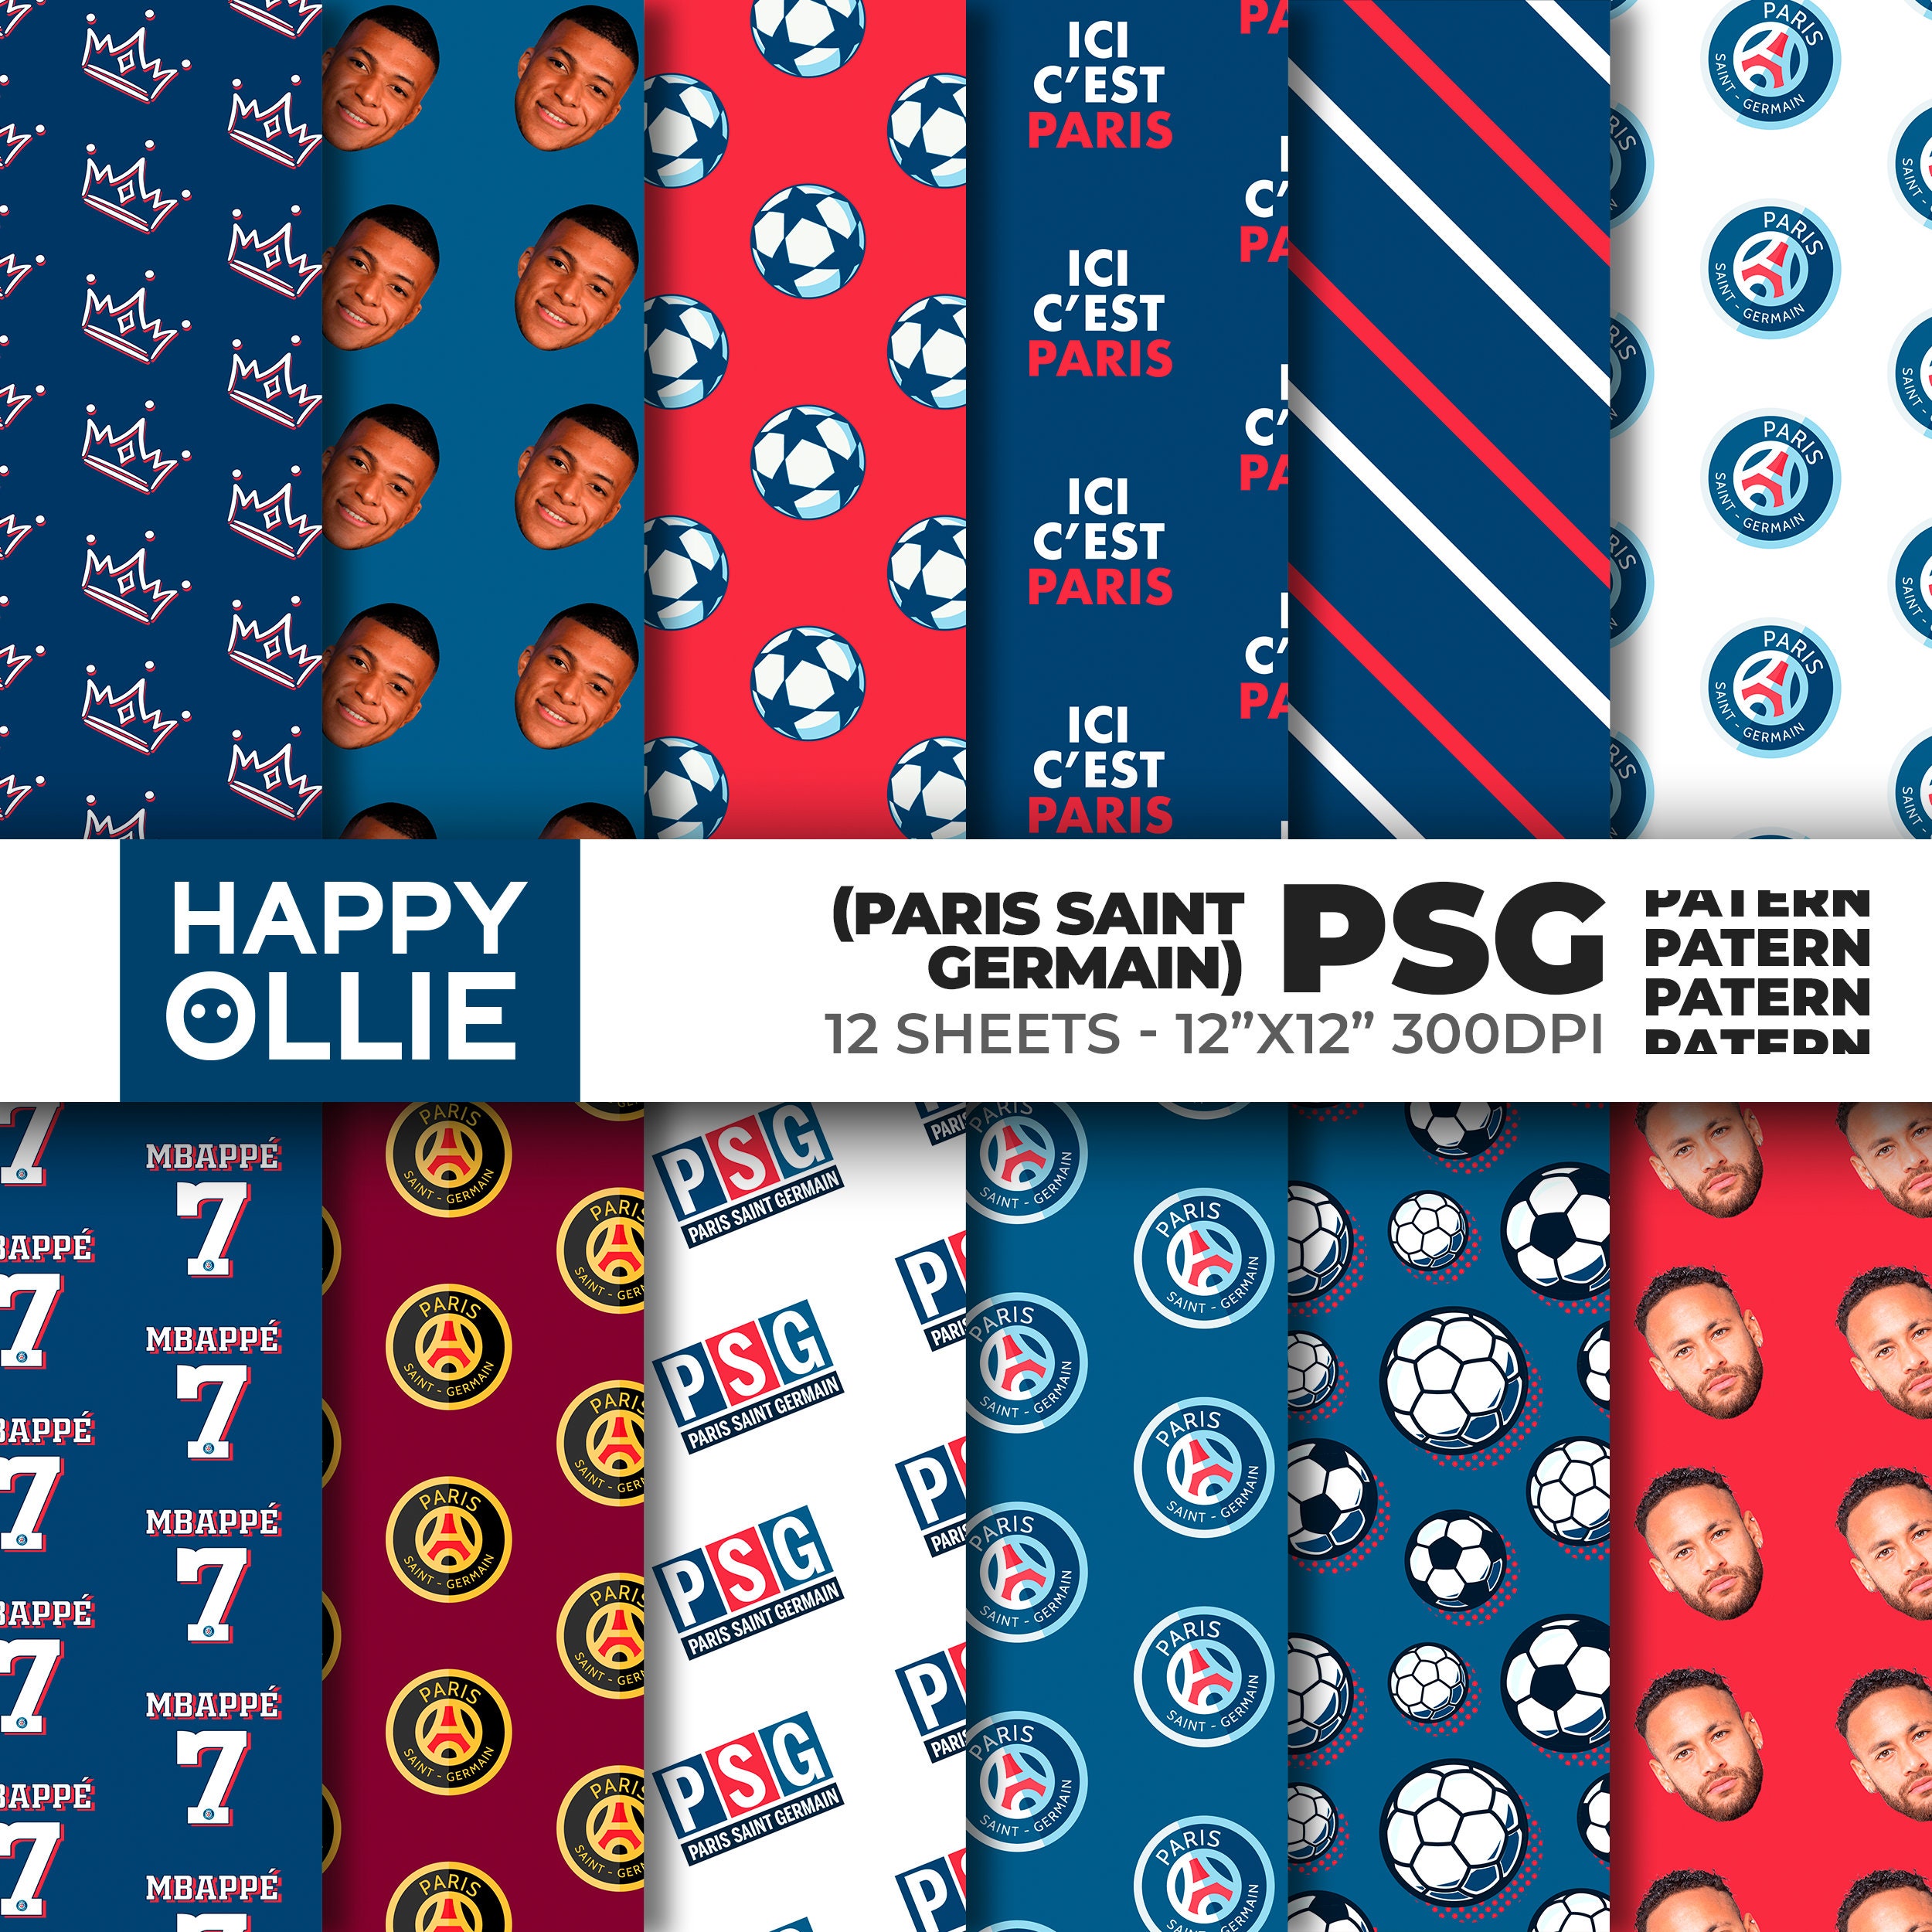 PSG Gable Box Coffret Cadeau PSG Football PSG Party -  France